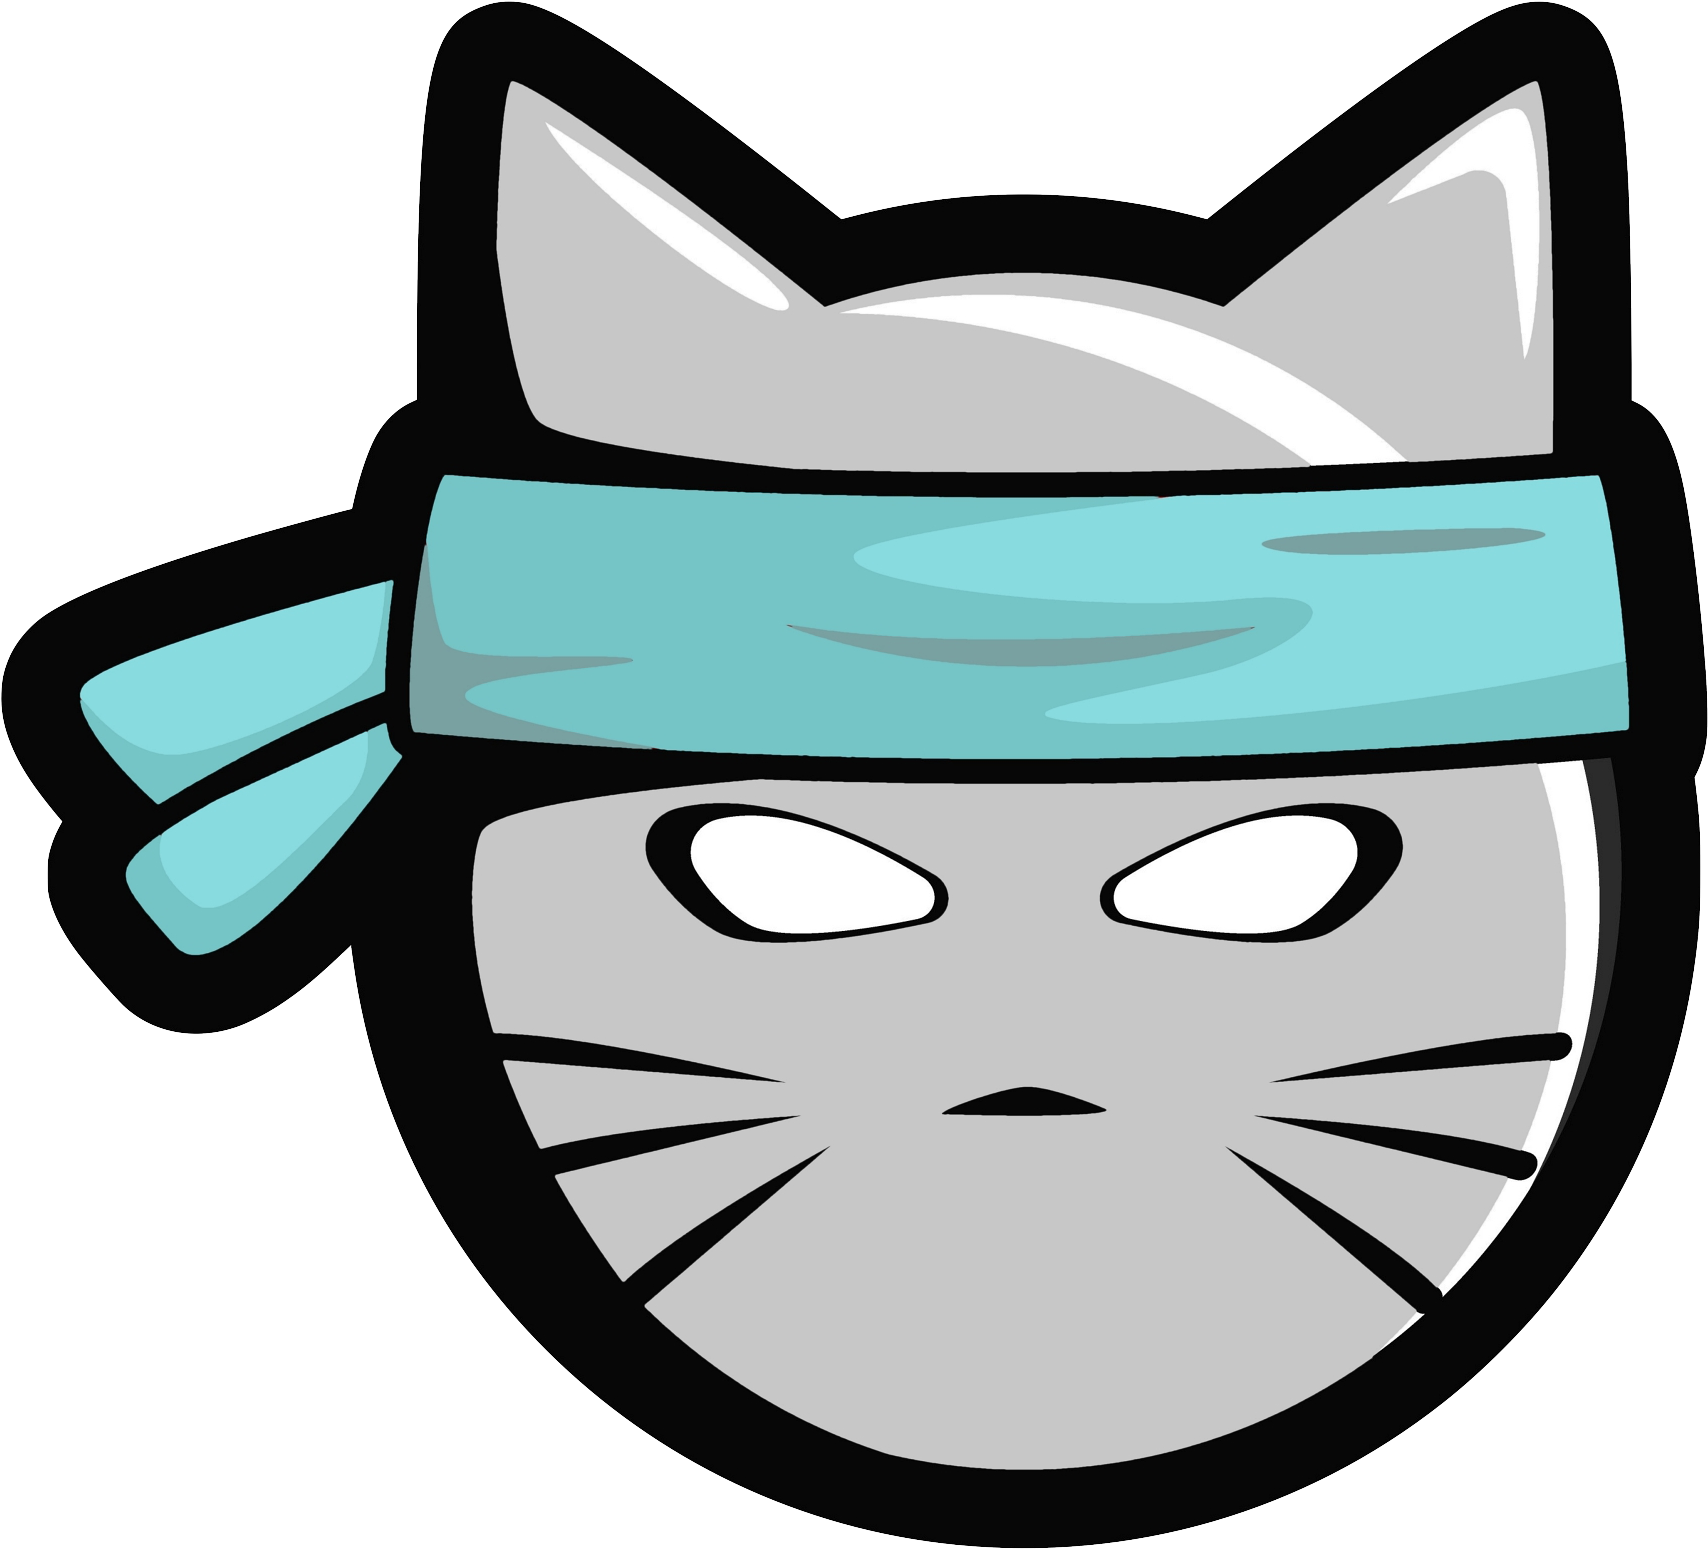 Annoyed Ninja Cat Cartoon PNG image